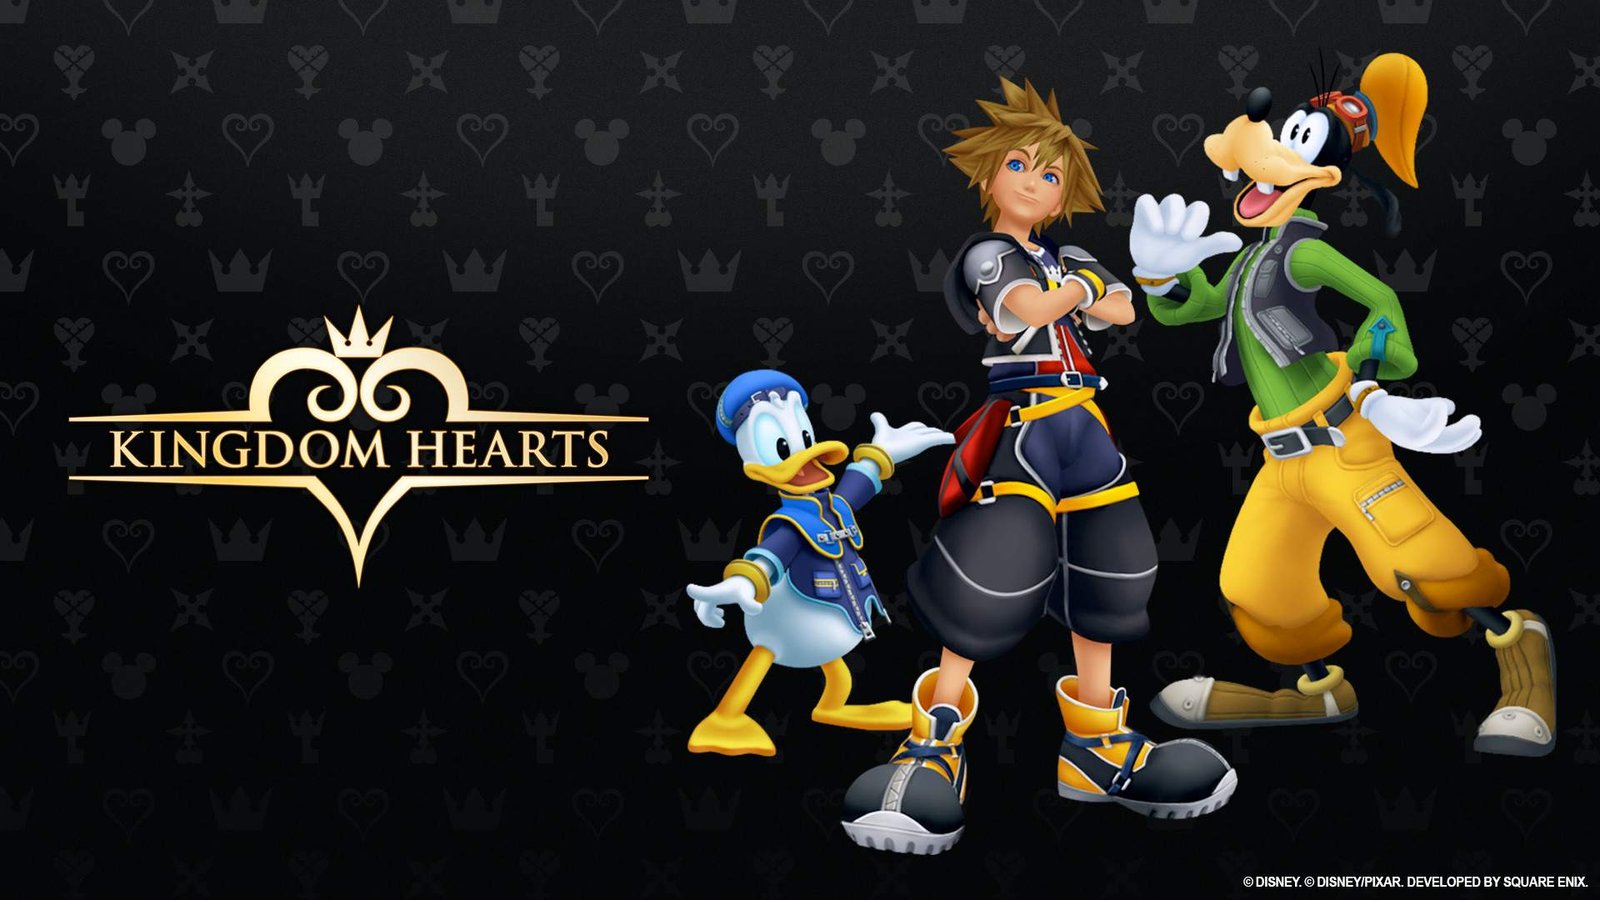 Is Kingdom Hearts a JRPG